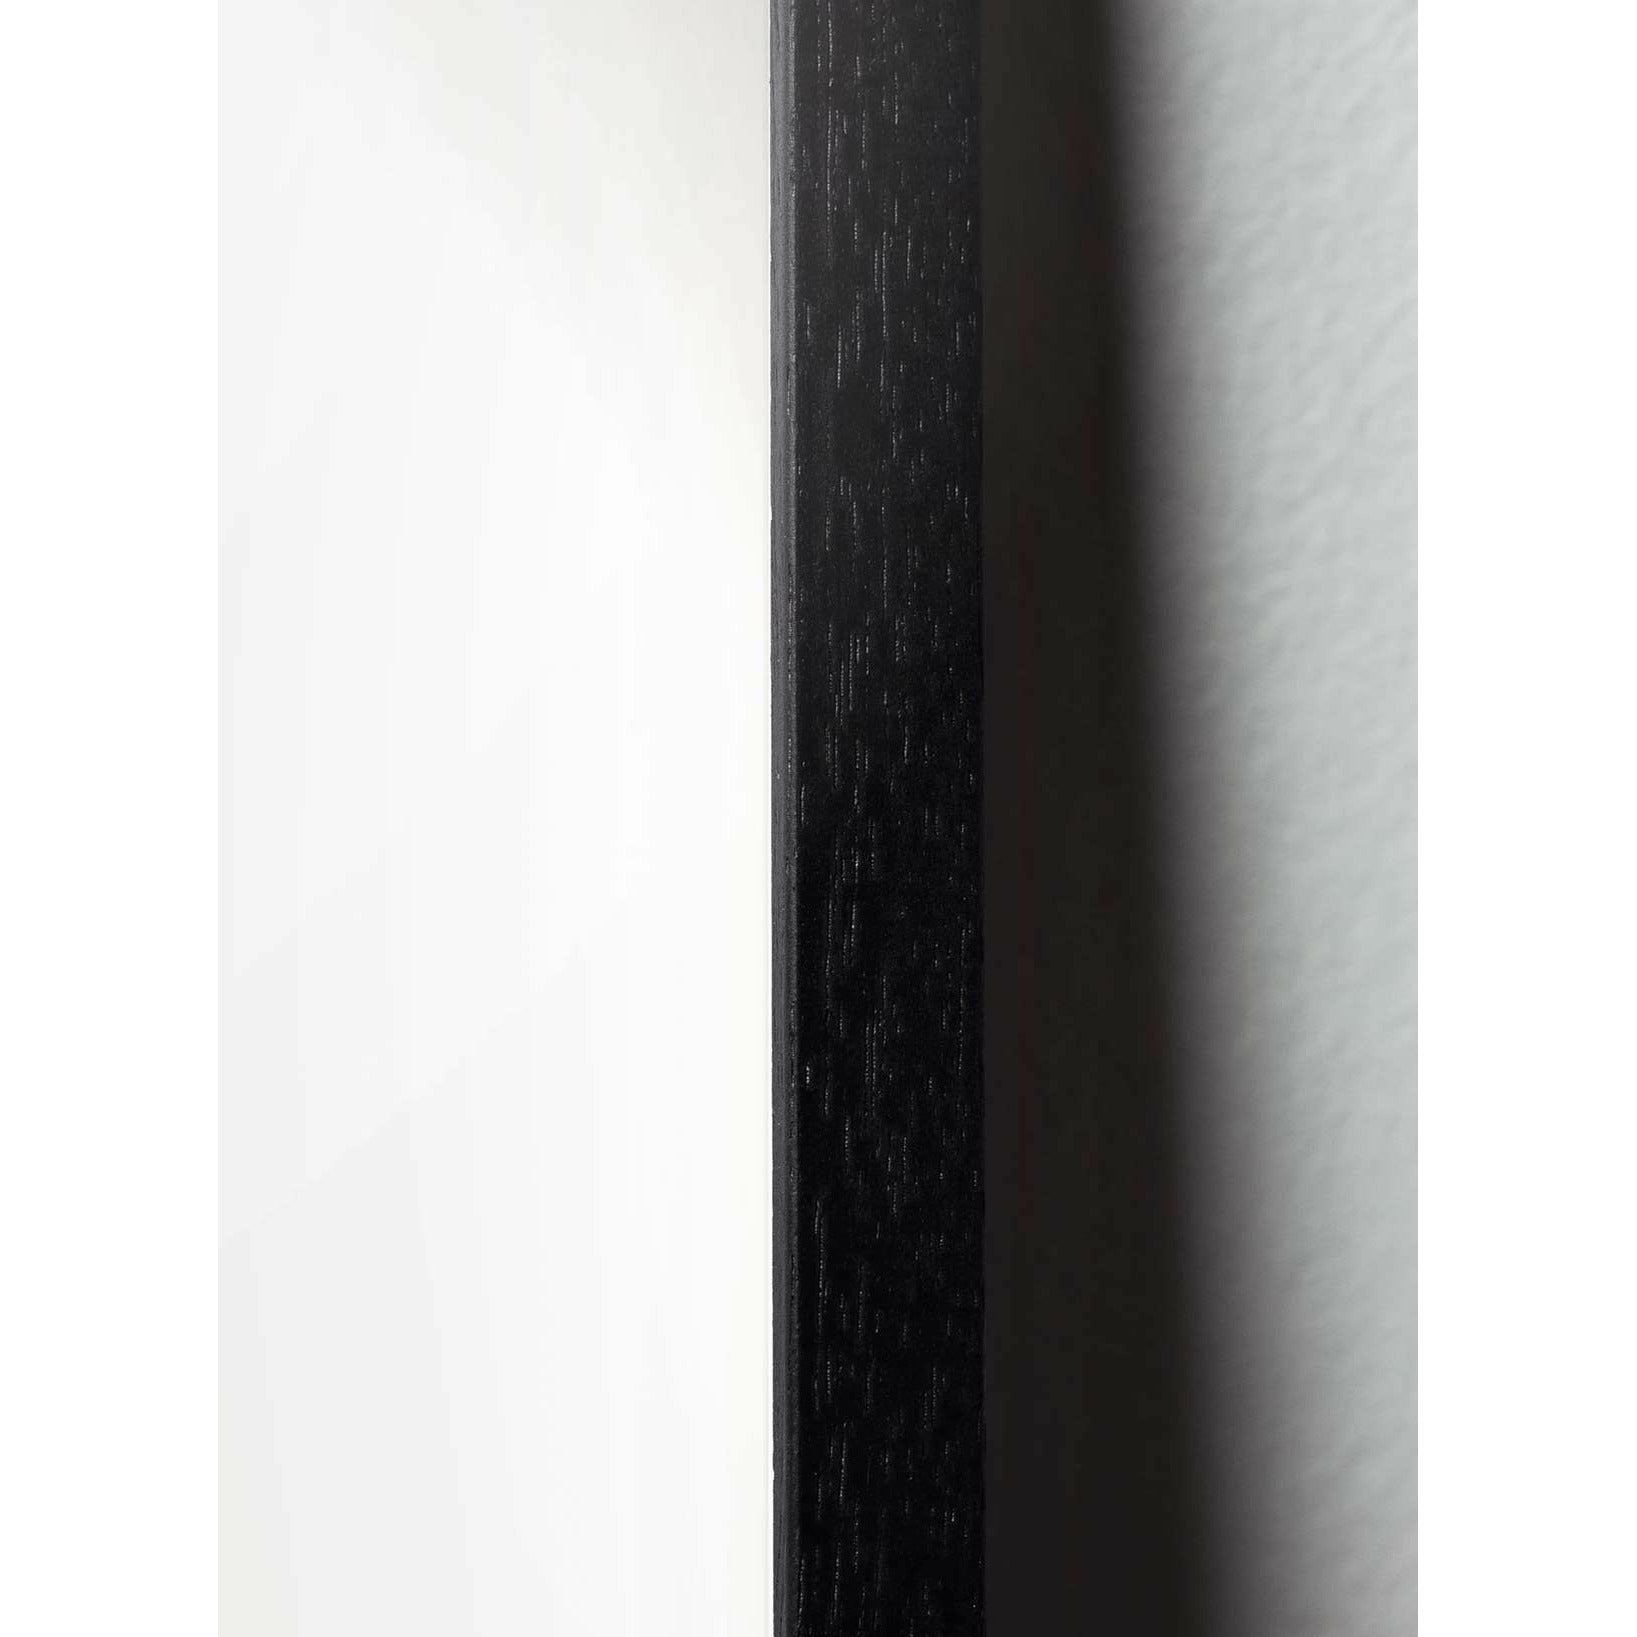 Brainchild Nallebjörn designikon affisch, ram i svart -målat trä 50x70 cm, grå